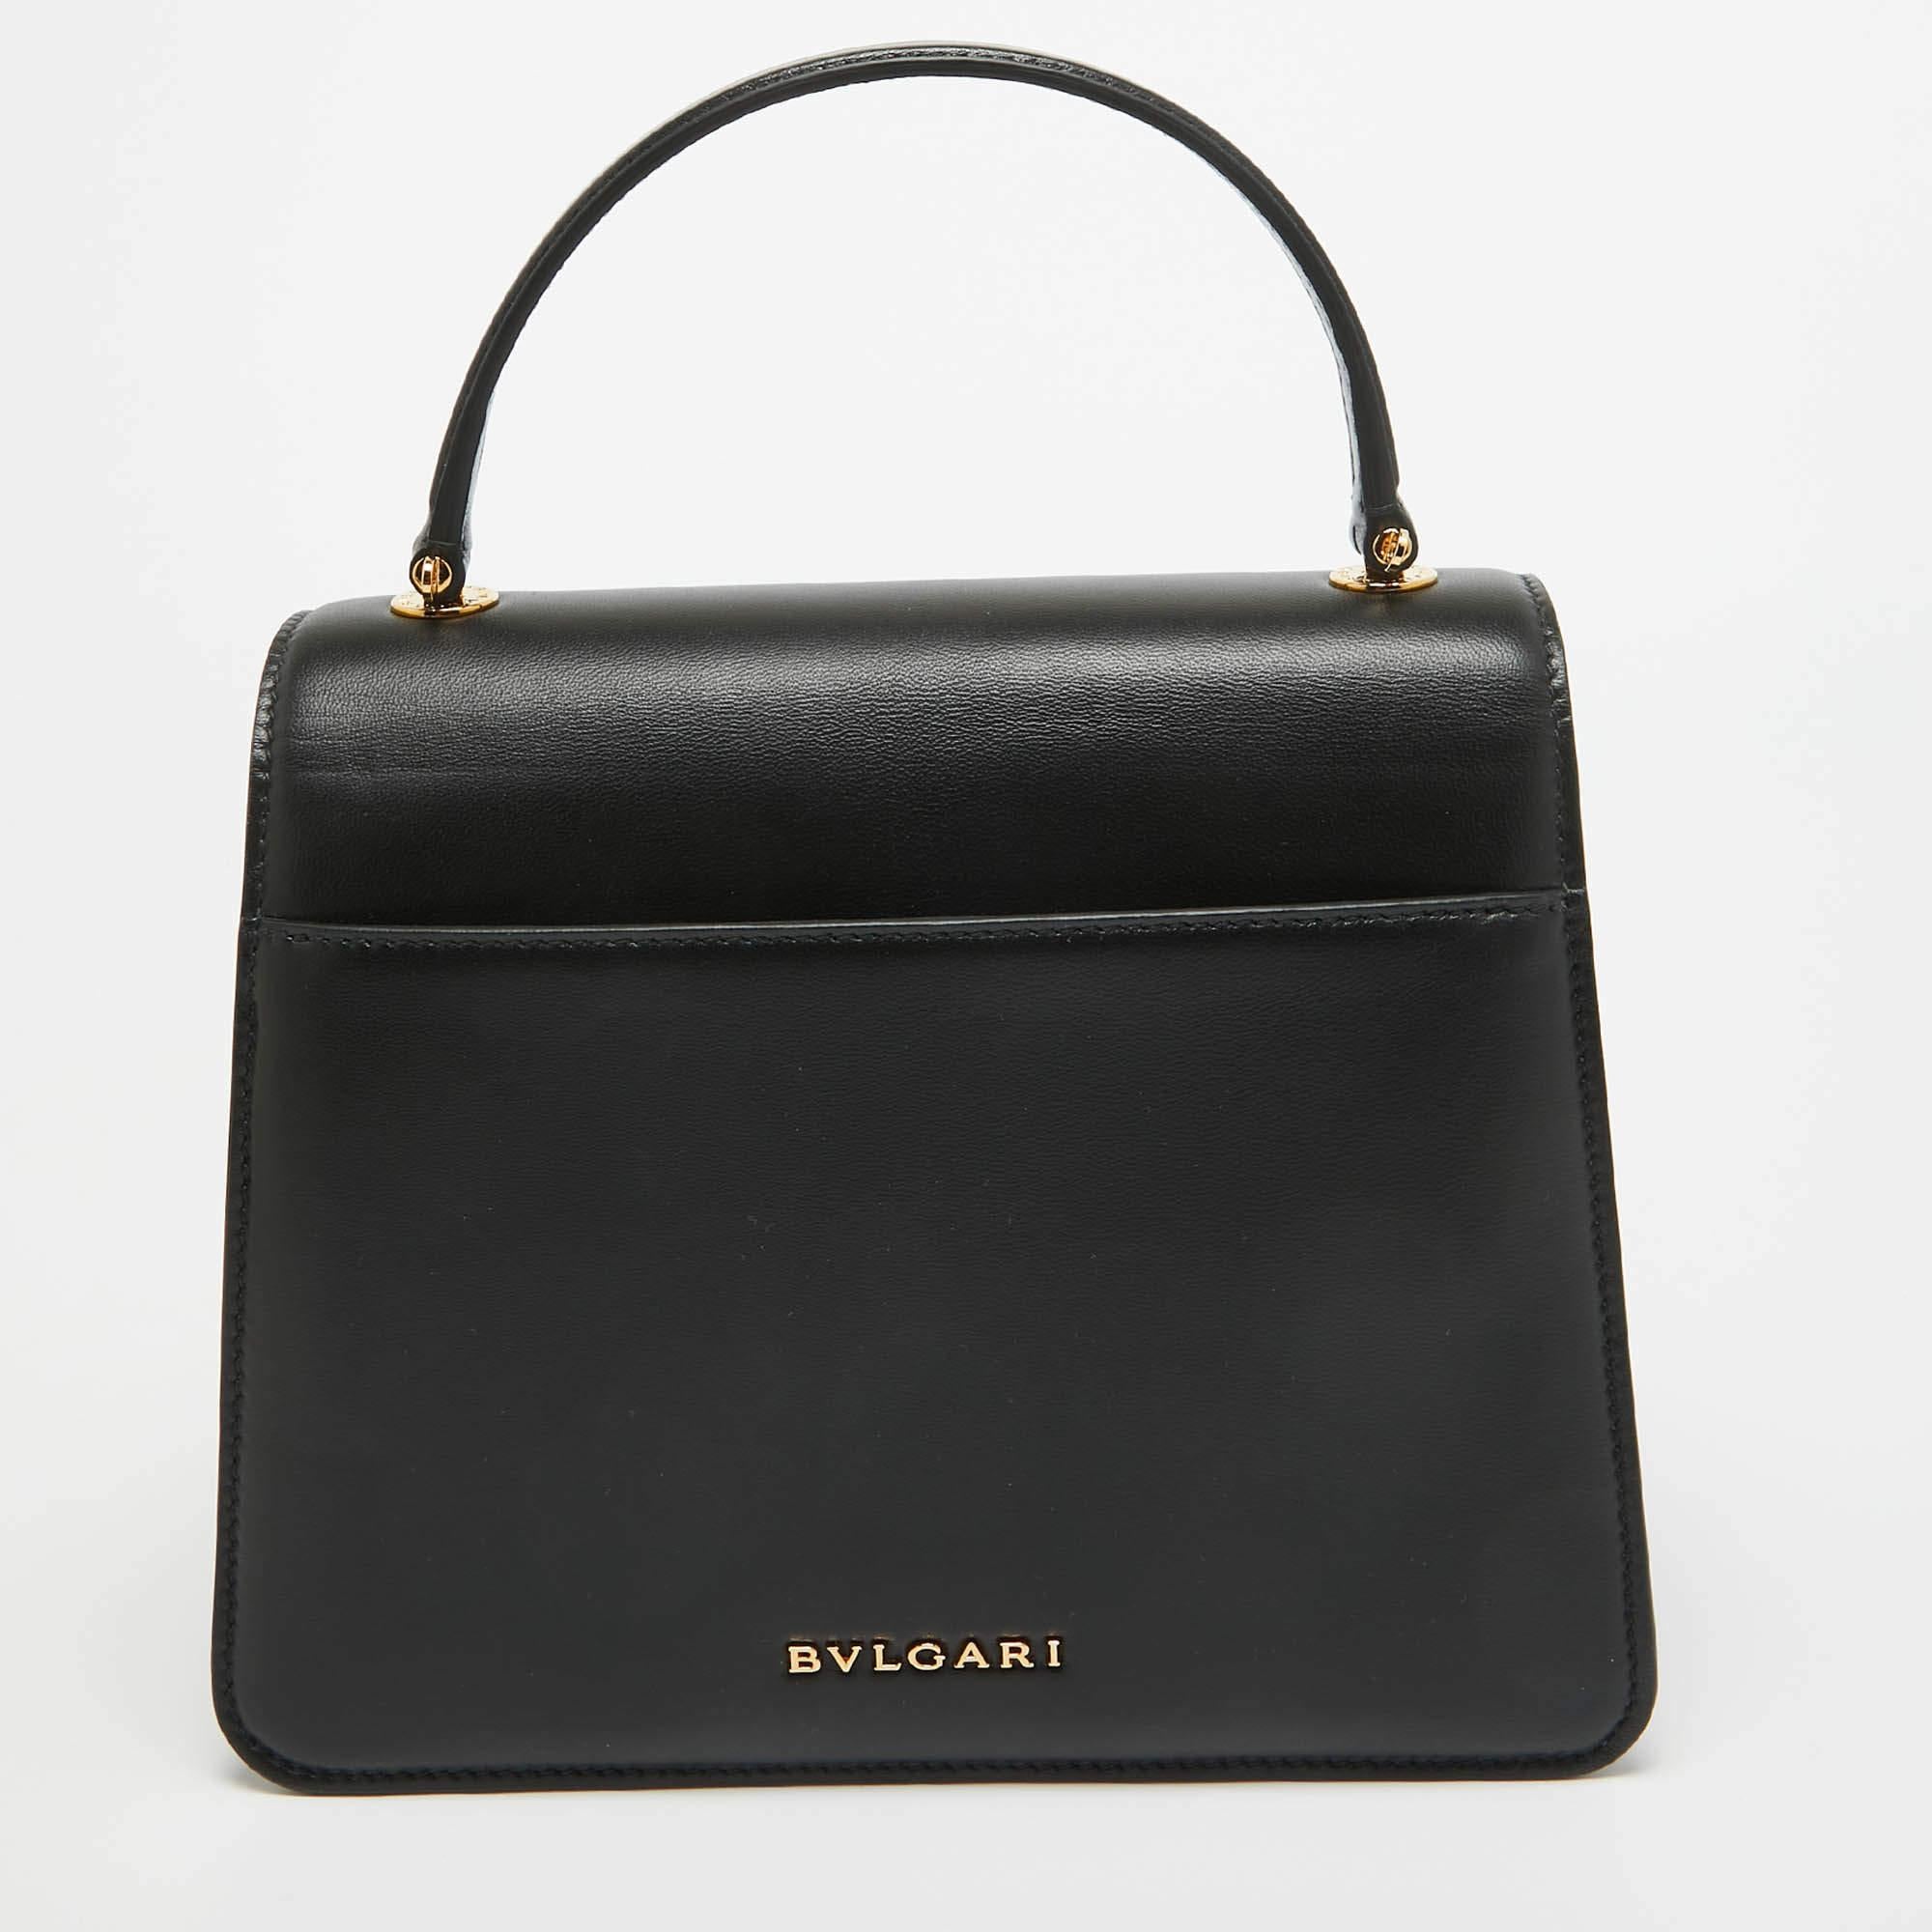 Bvlgari x Mary Katrantzou Black Leather Bejewelled Top Handle Bag For Sale 5